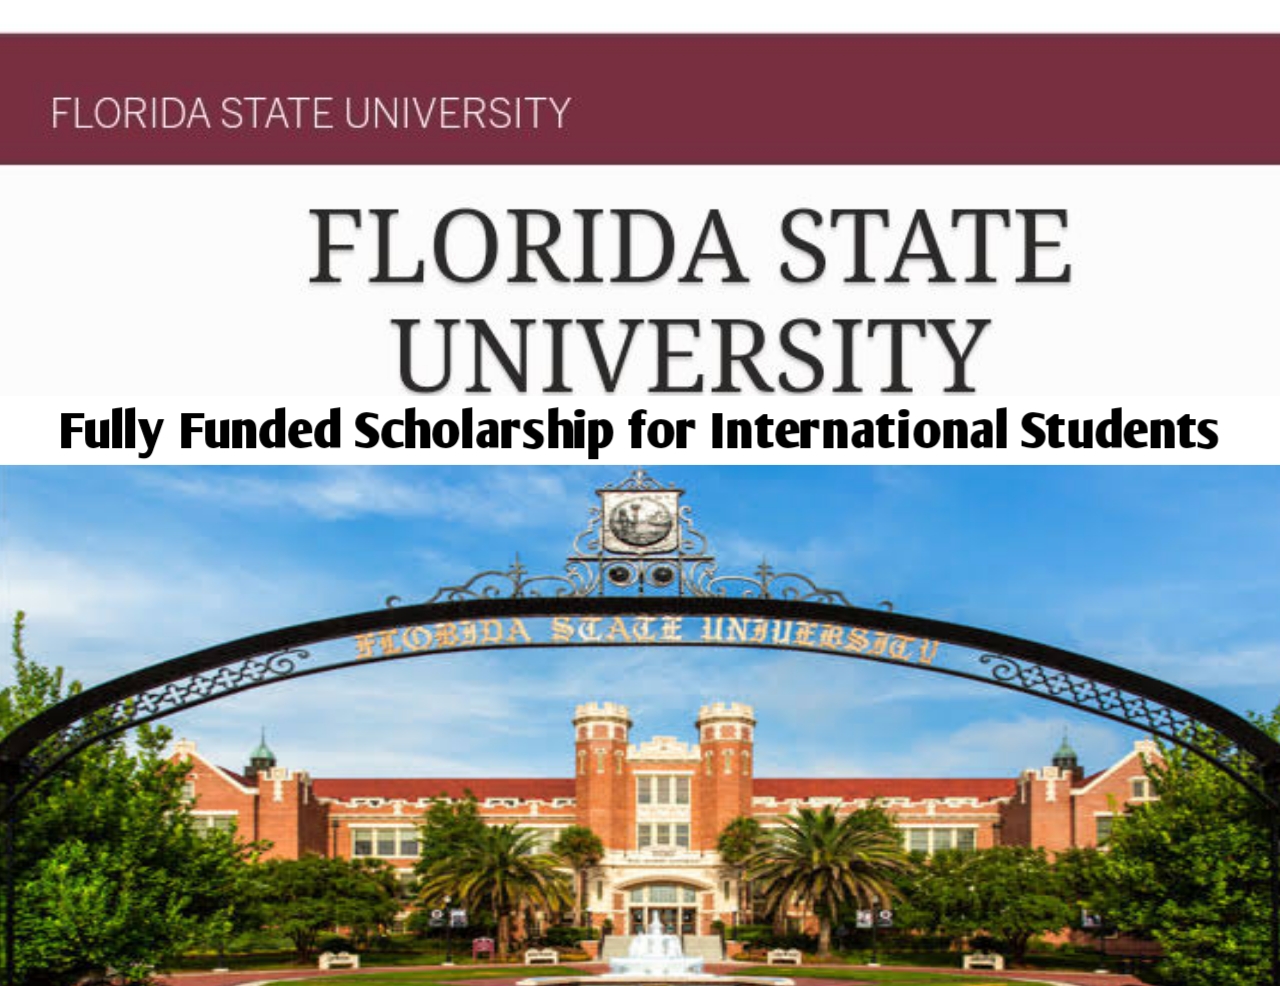 20221121 120913 - Florida State University, USA Fully Funded Scholarship for International Students